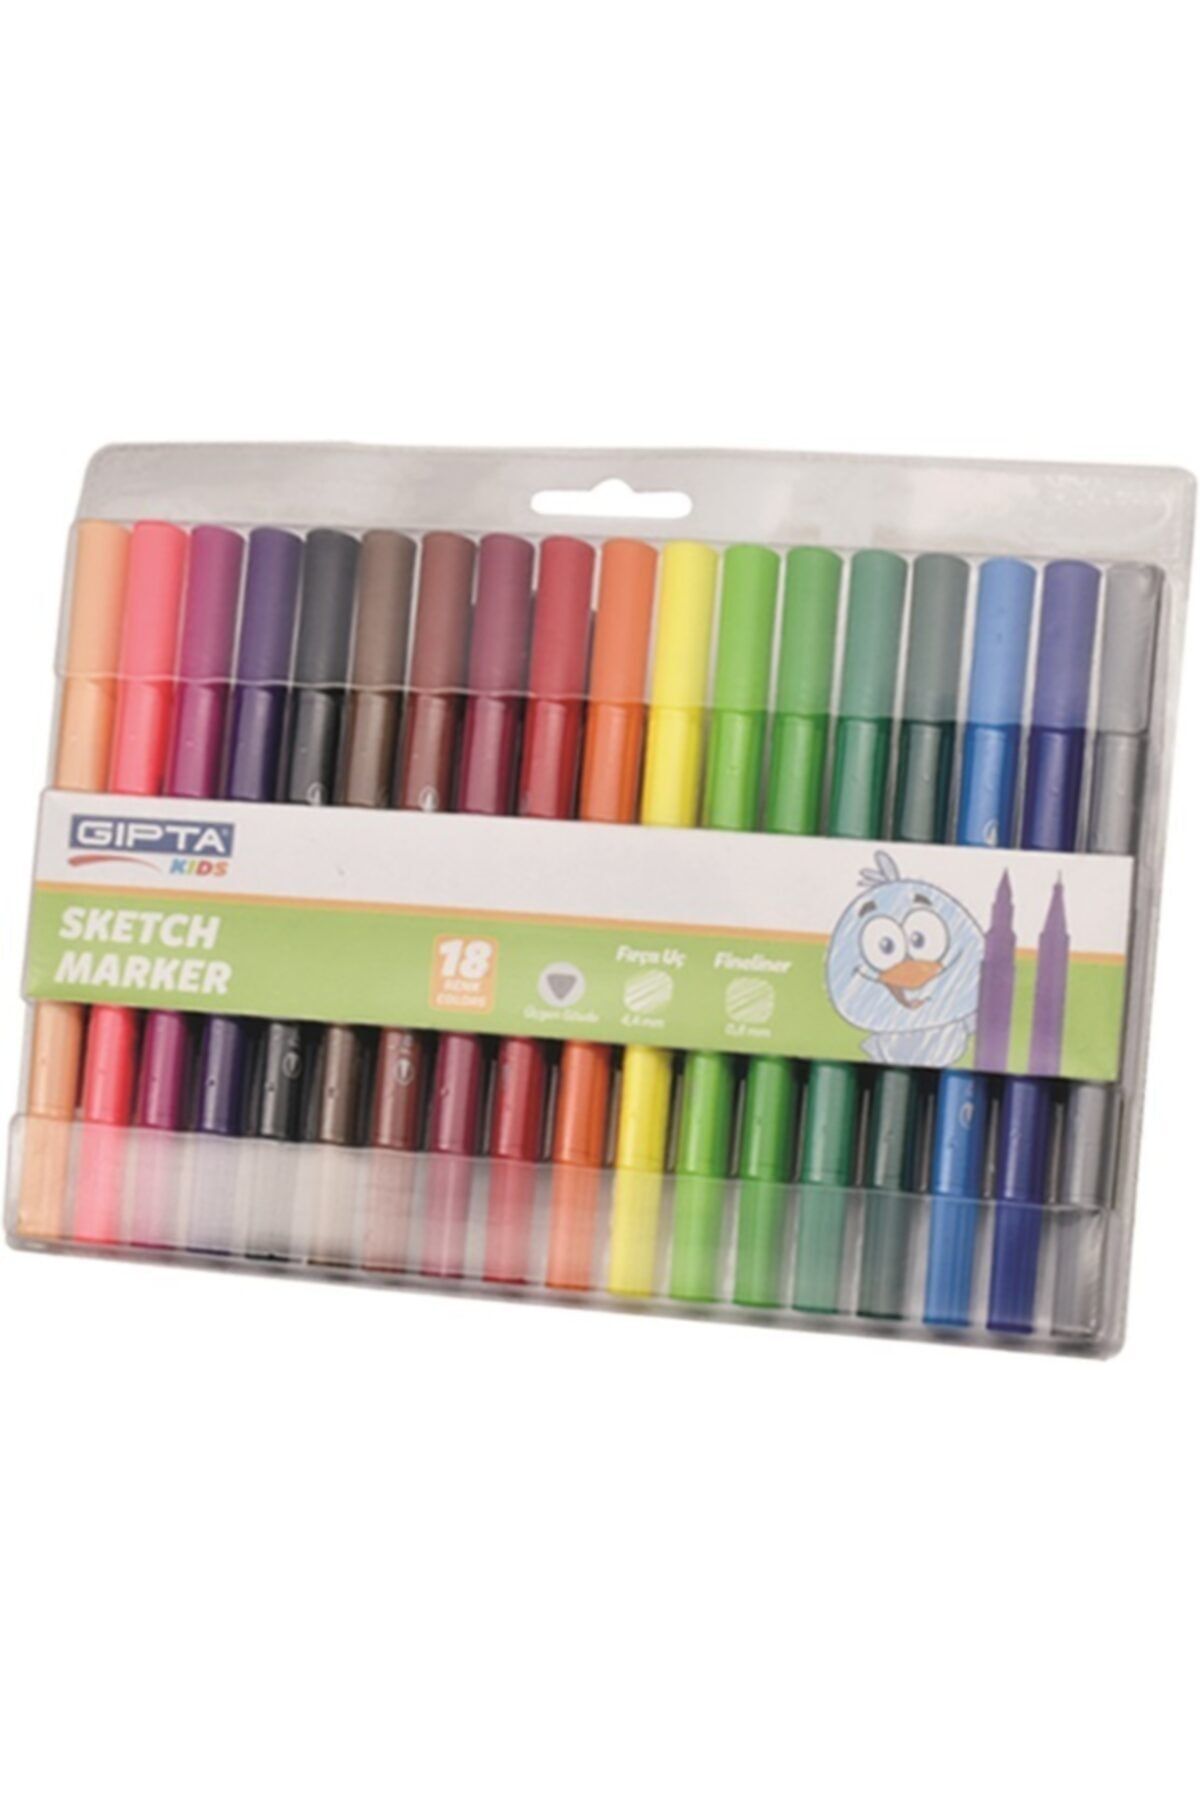 Gıpta Sketch Marker Fırça Uç + Fineliner Keçe Uç Kalem Pvc Çantalı (Çift Uçlu) 18 Renk